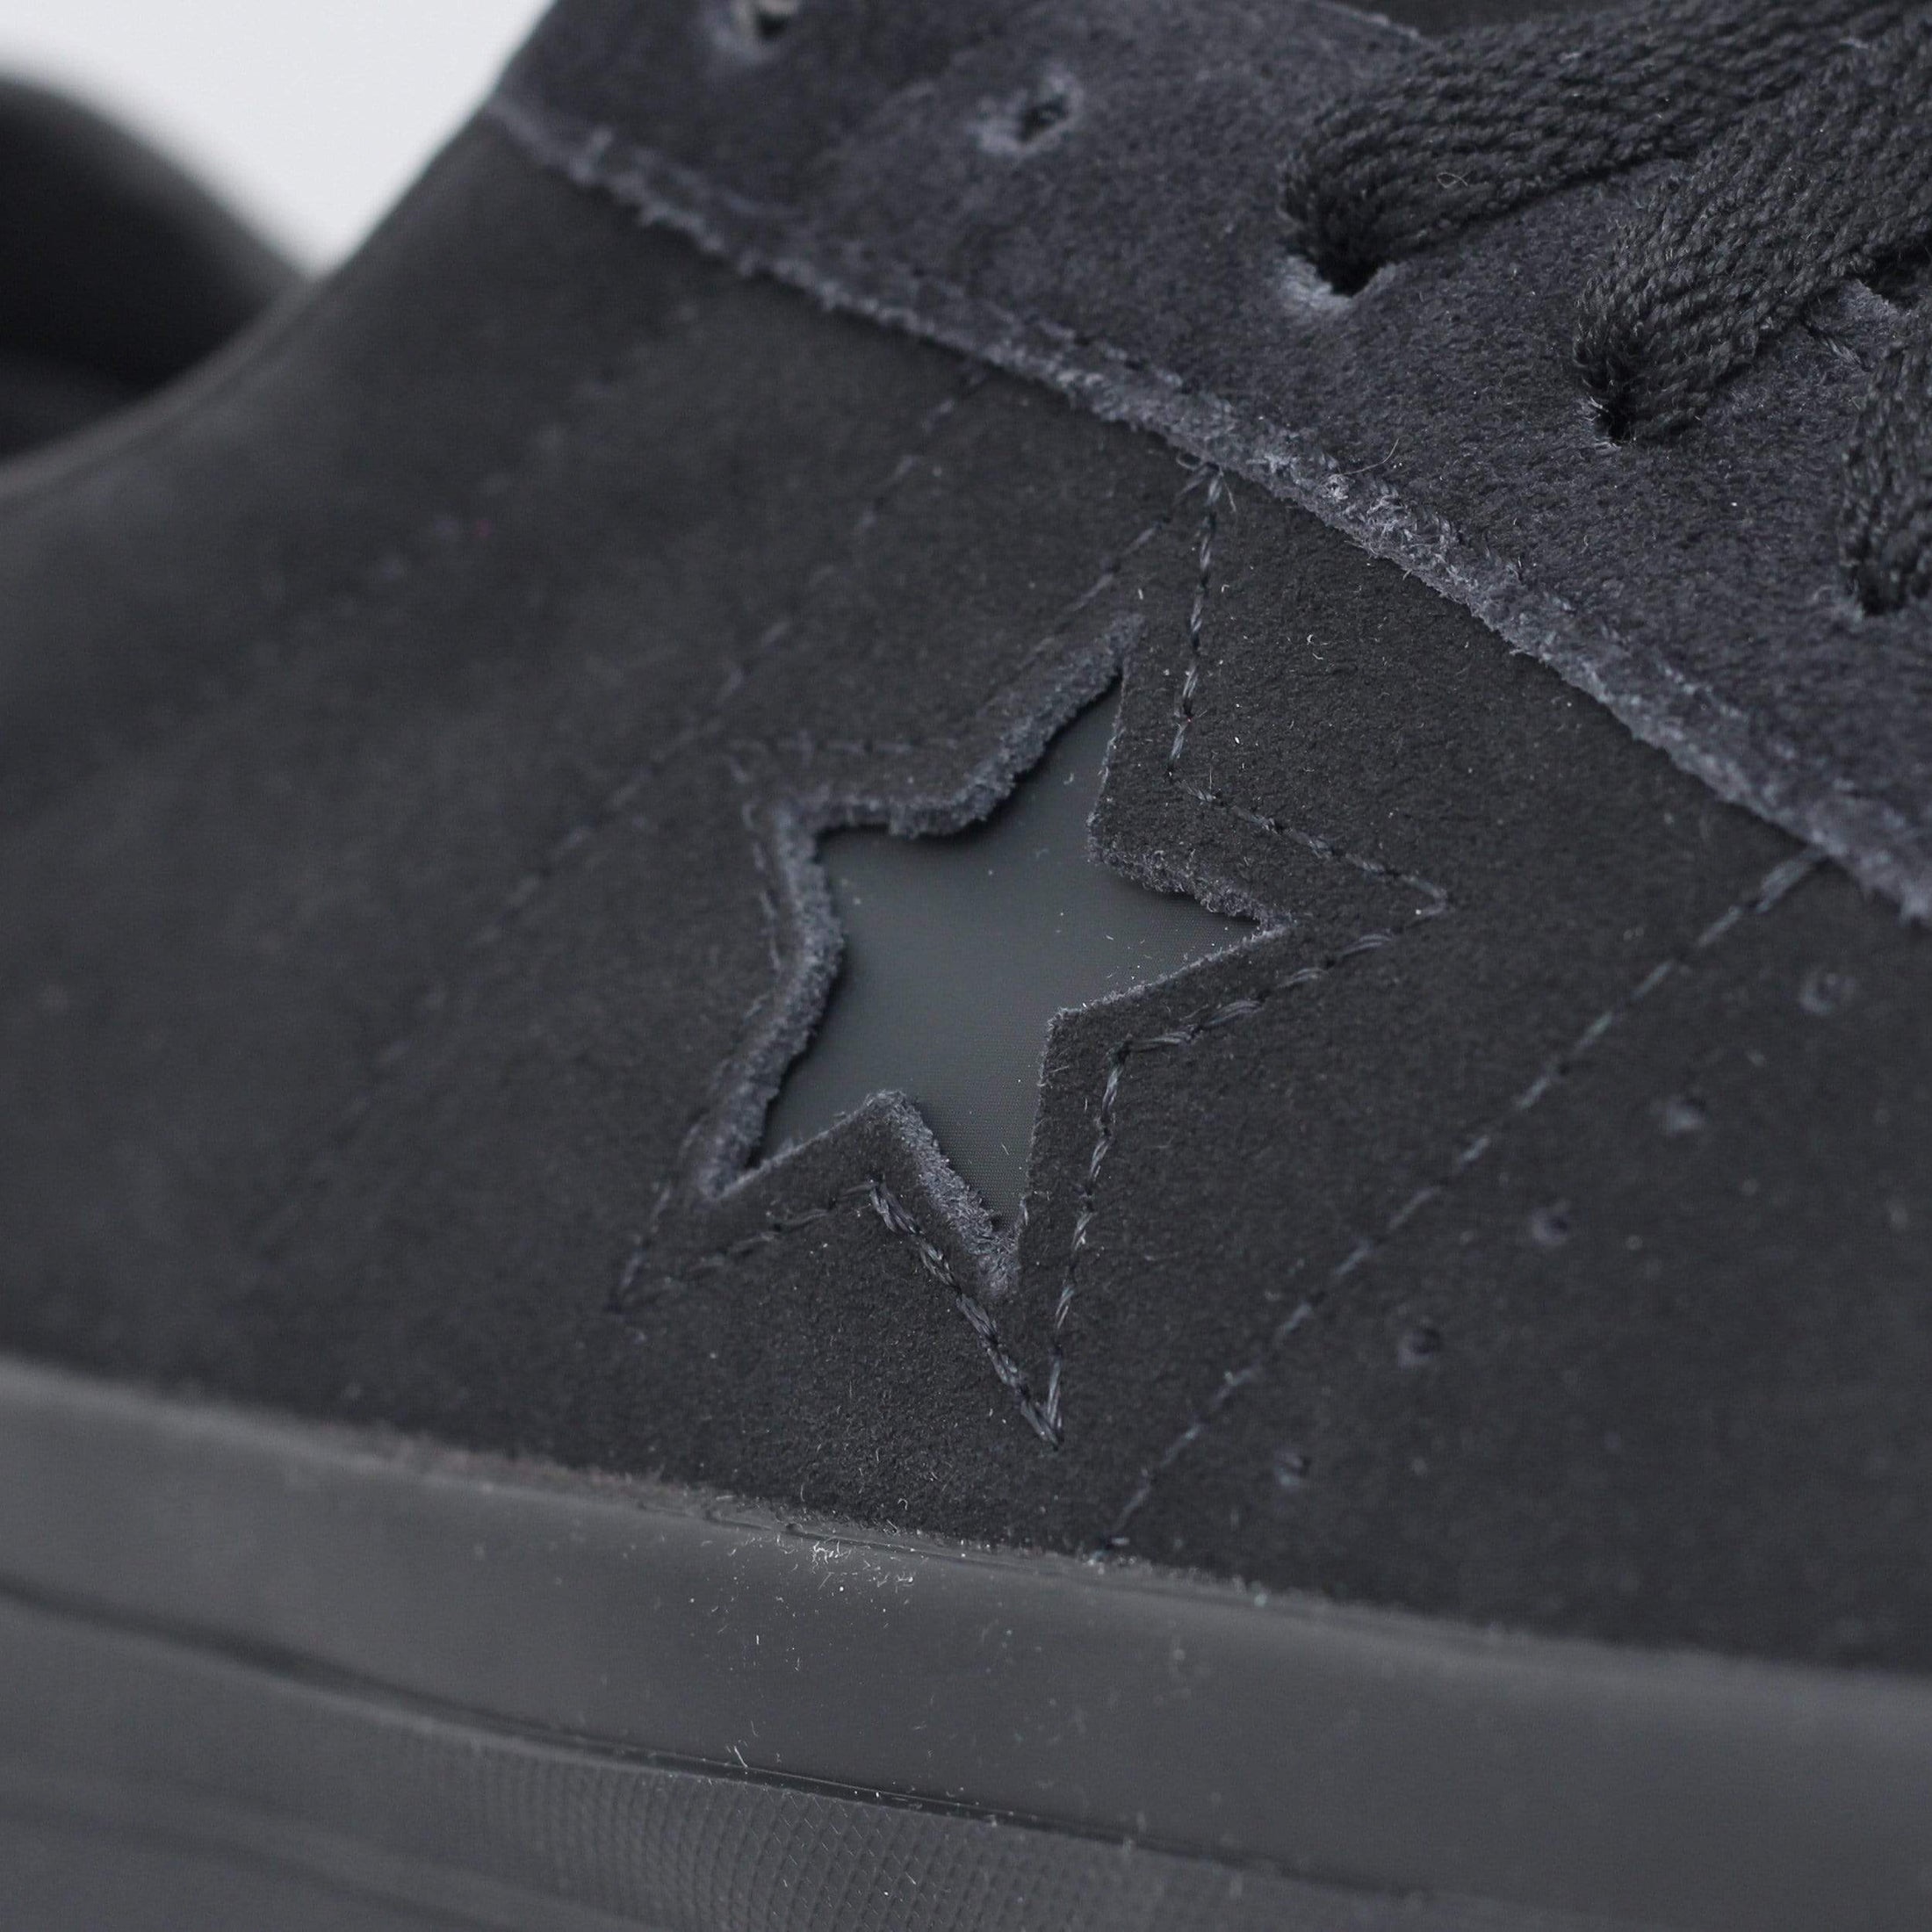 Converse One Star Pro OX Suede Shoes Black / Black / Black